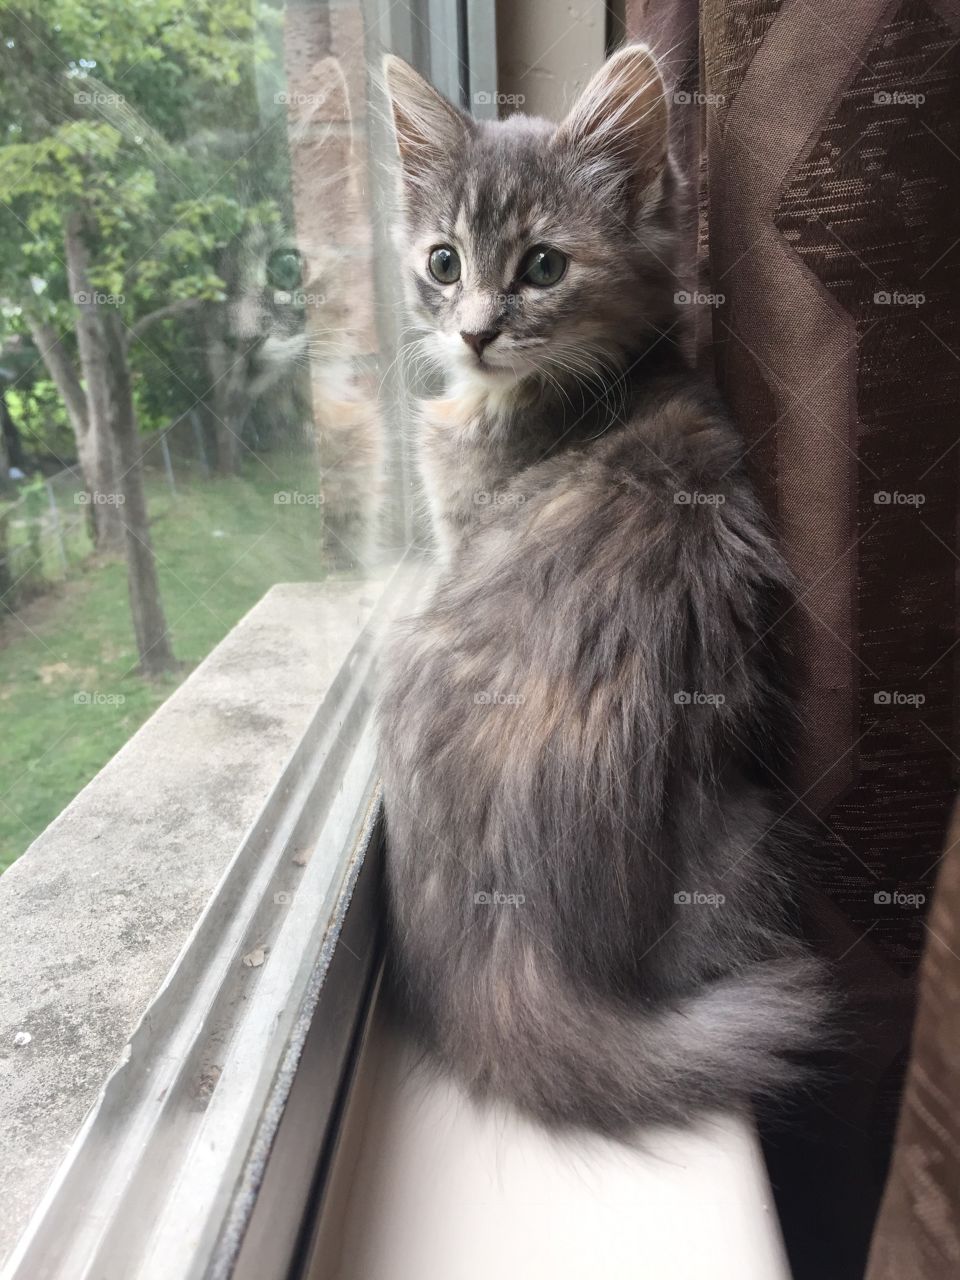 Cat in windowsill